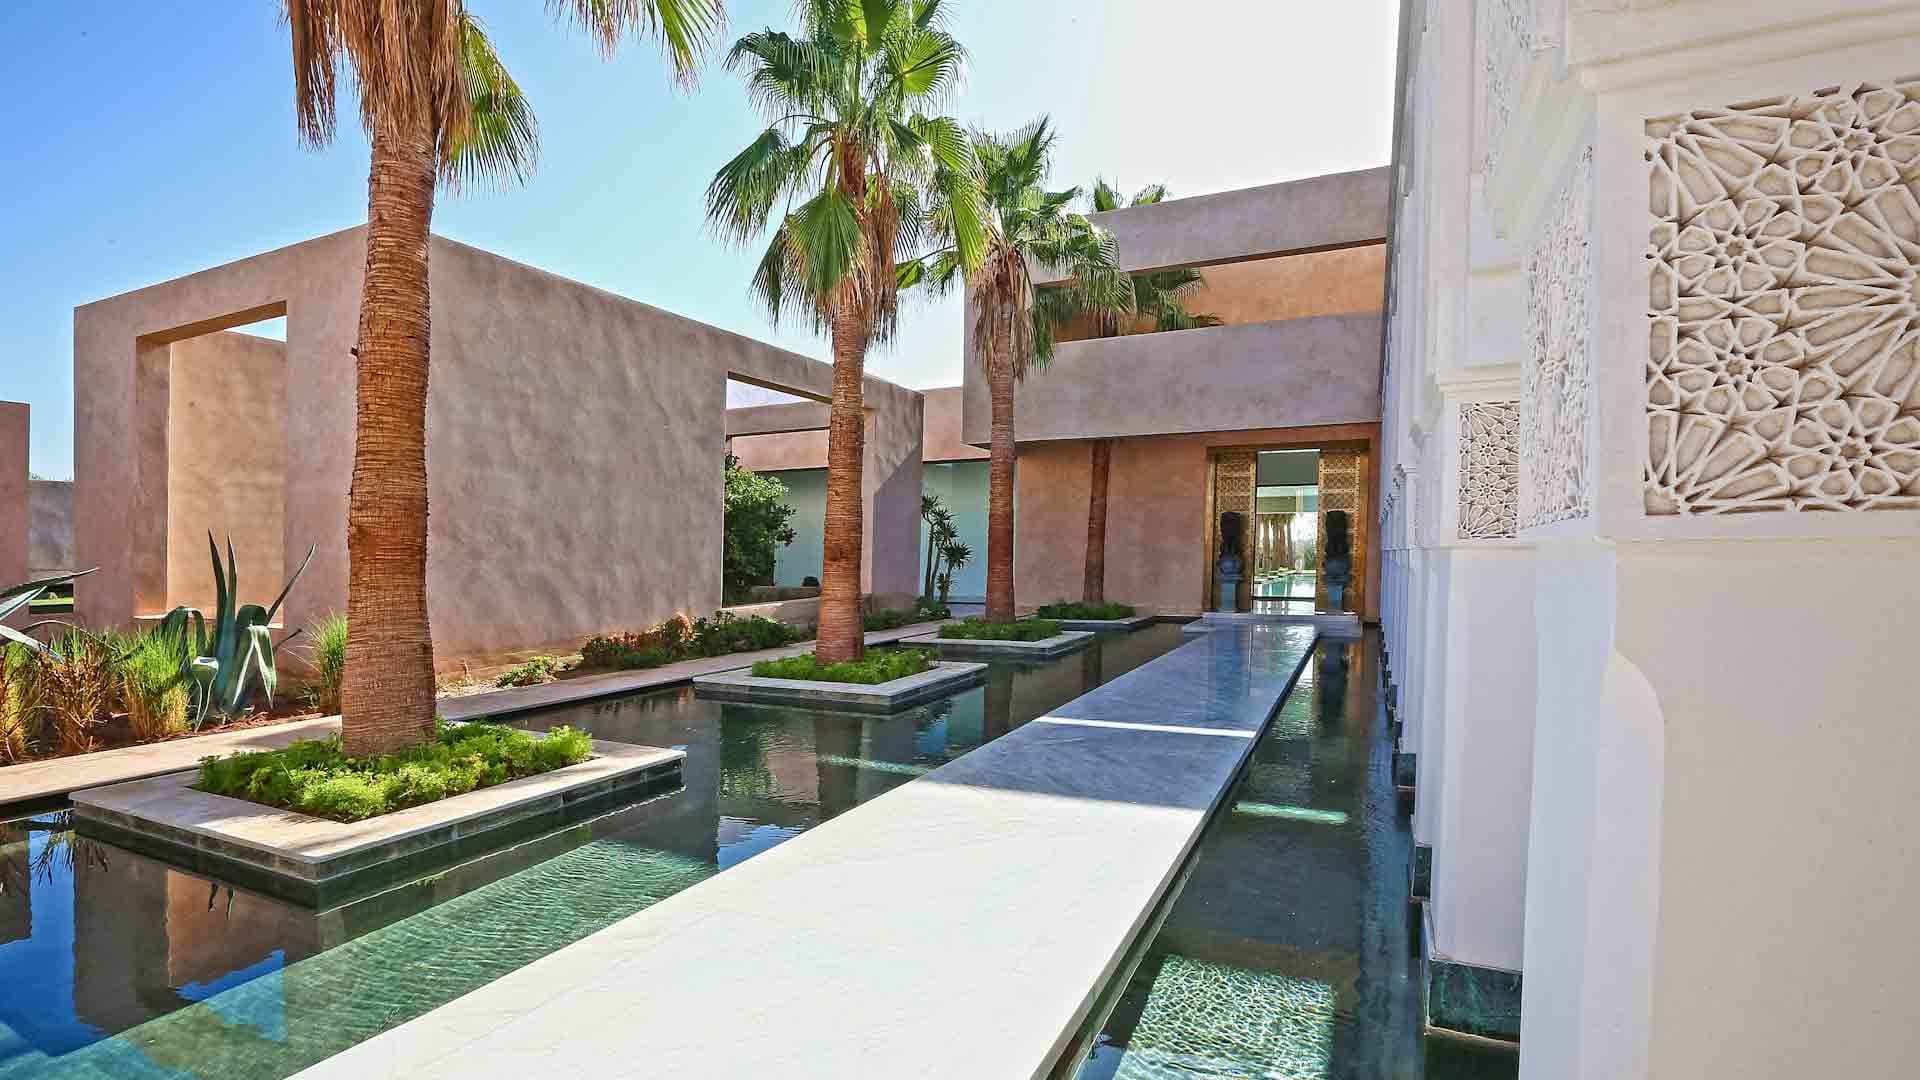 6 Bedroom Villa For Sale Marrakech Lp08723 D8a272216c92f80.jpg